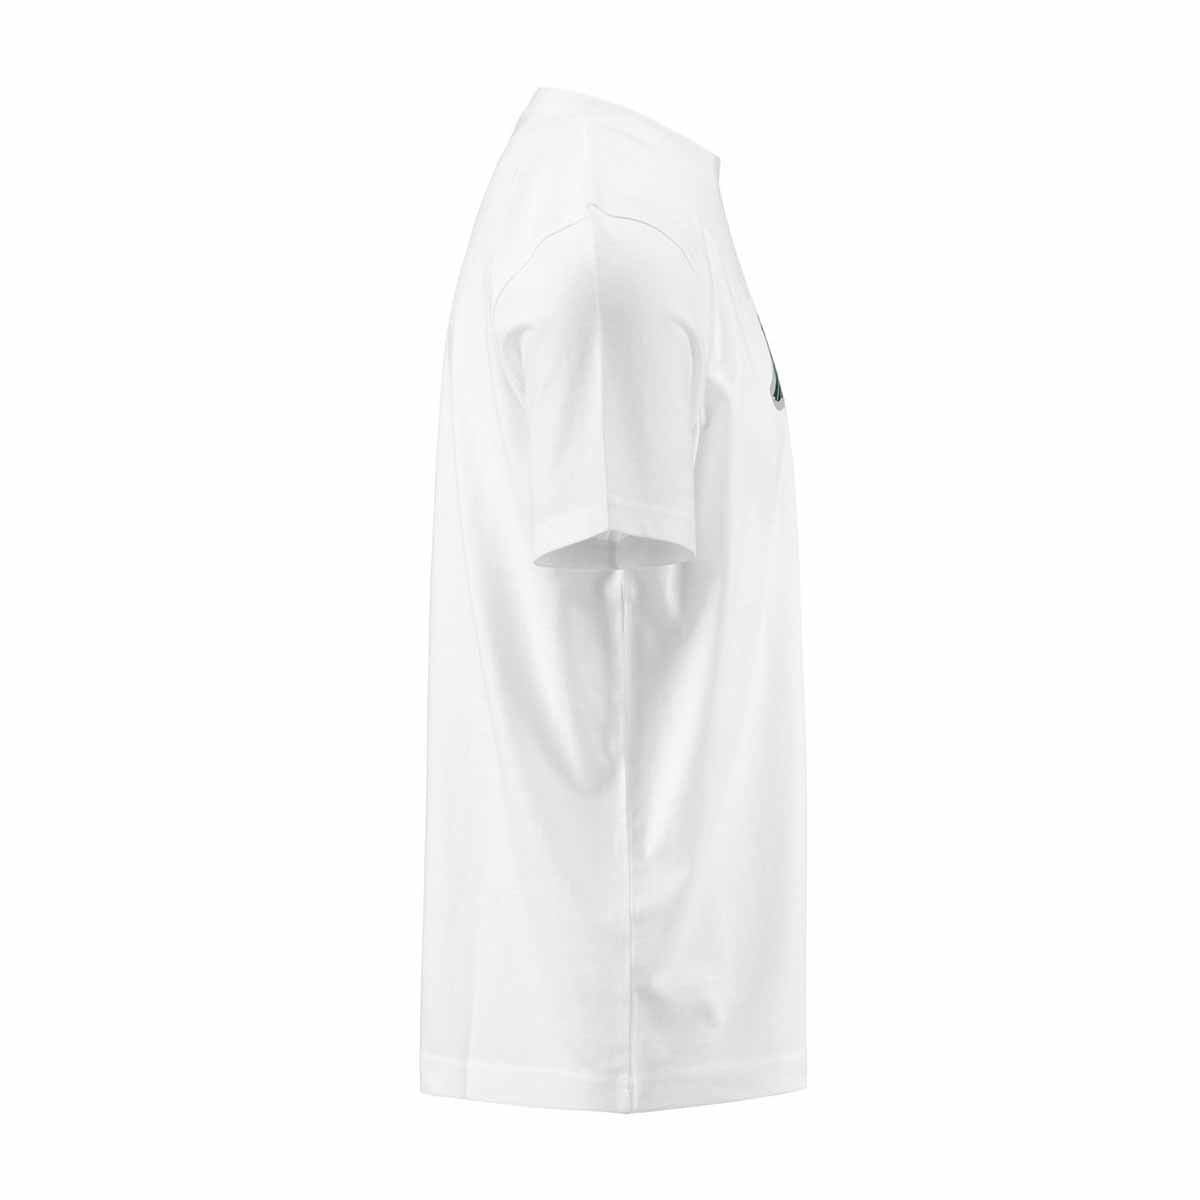 T-shirt homme Ermy Sportswear Blanc